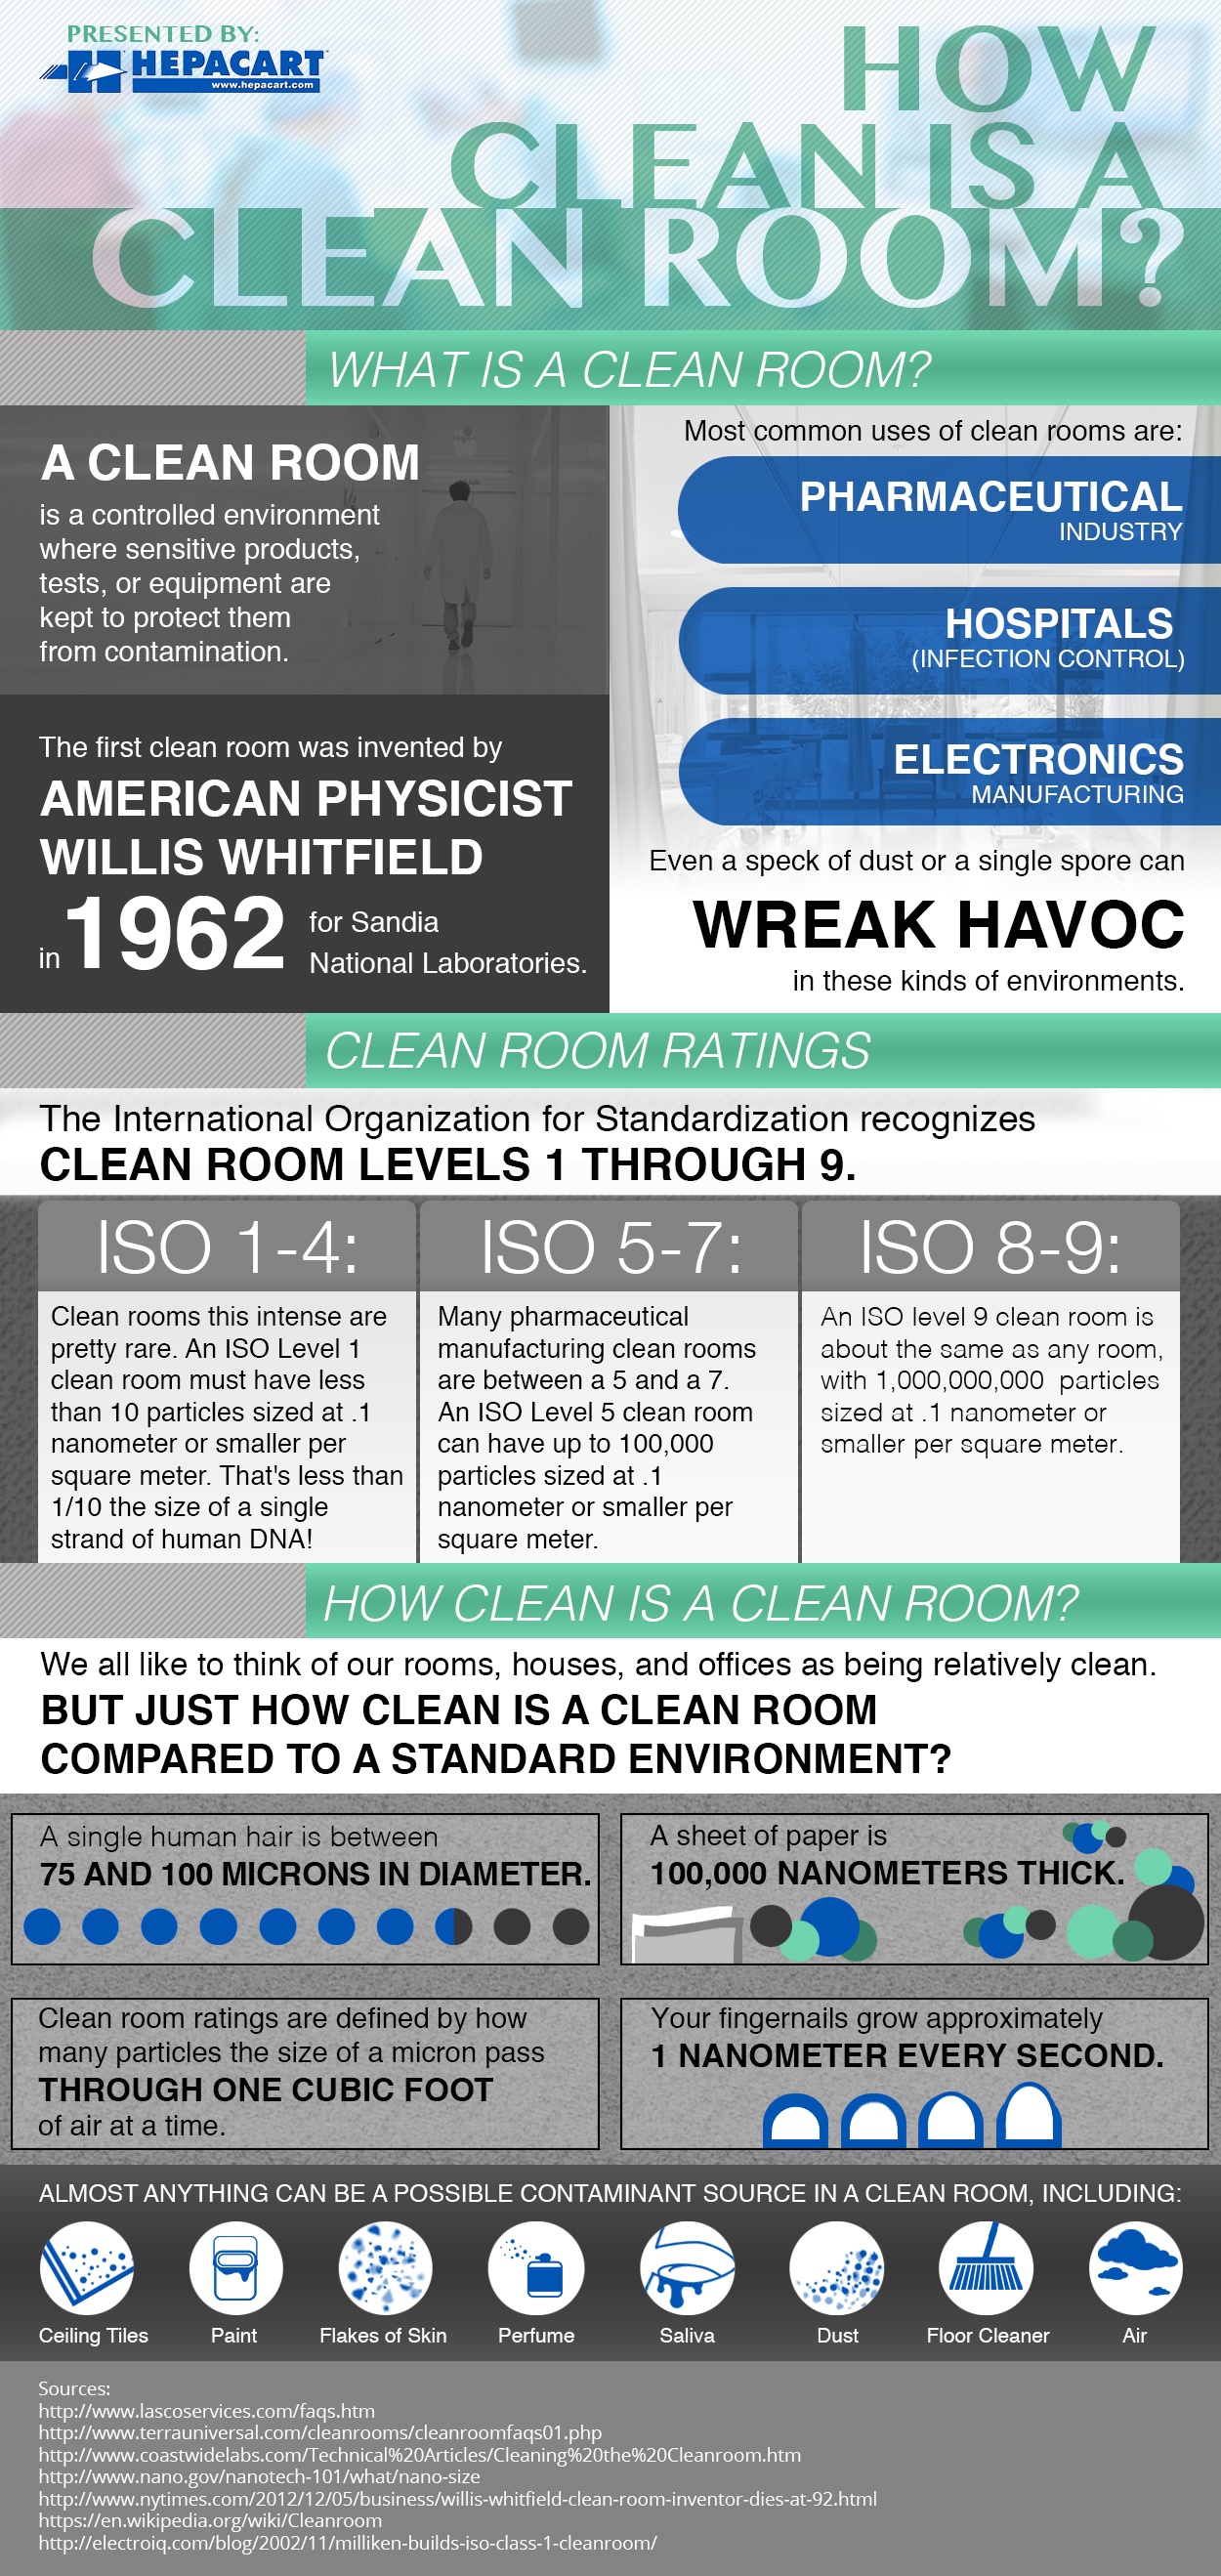 Hepacart-cleanroom-infographic-V2-1